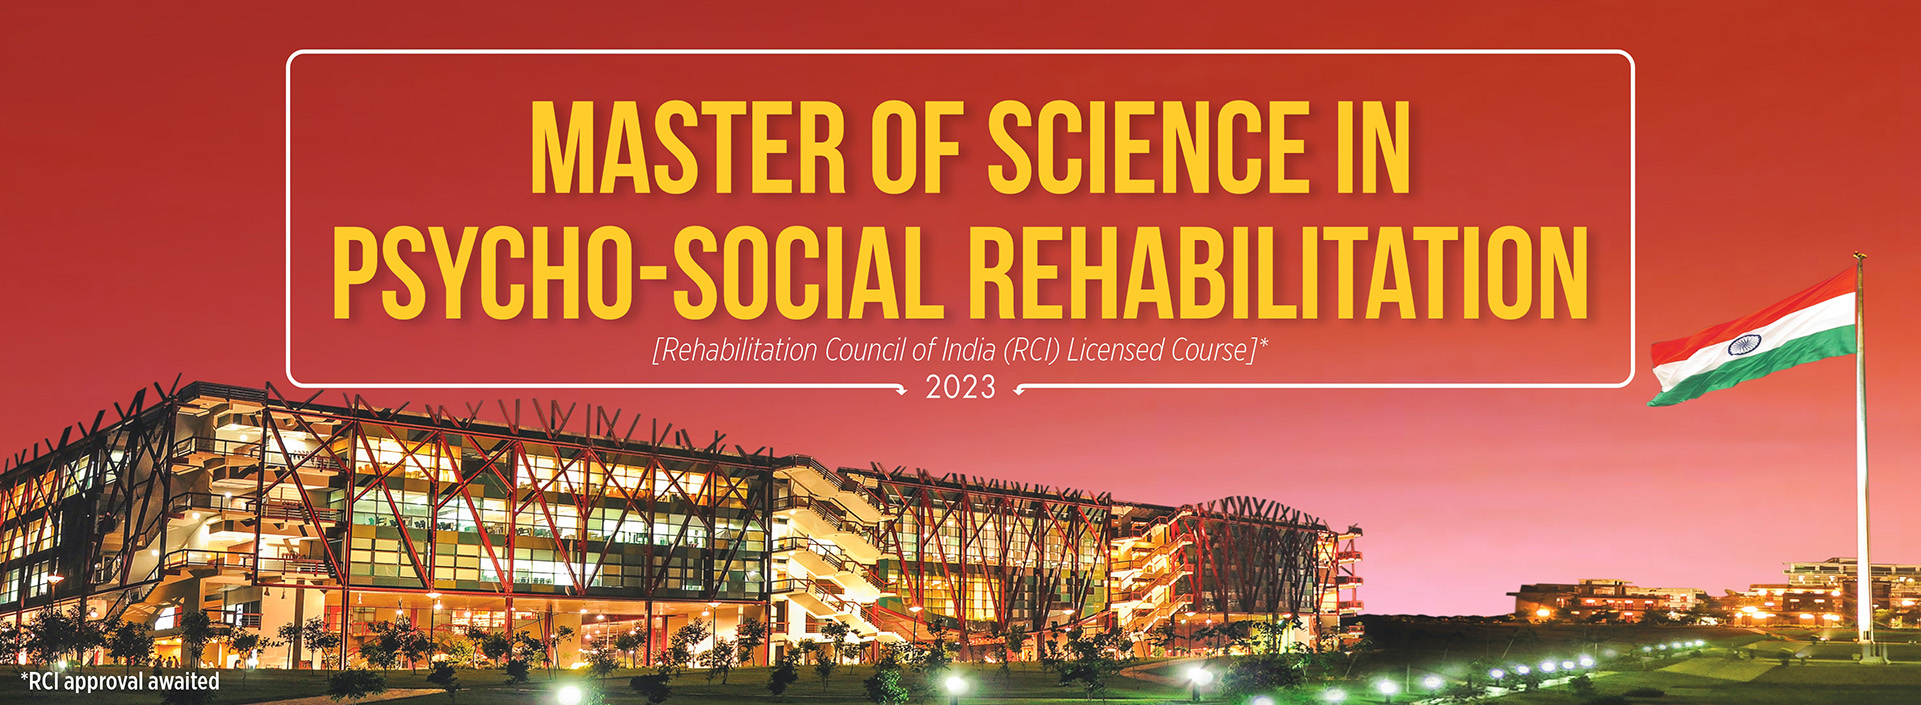 JIBS Website Header - Masters of Science in Psycho-Social Rehabilitation c